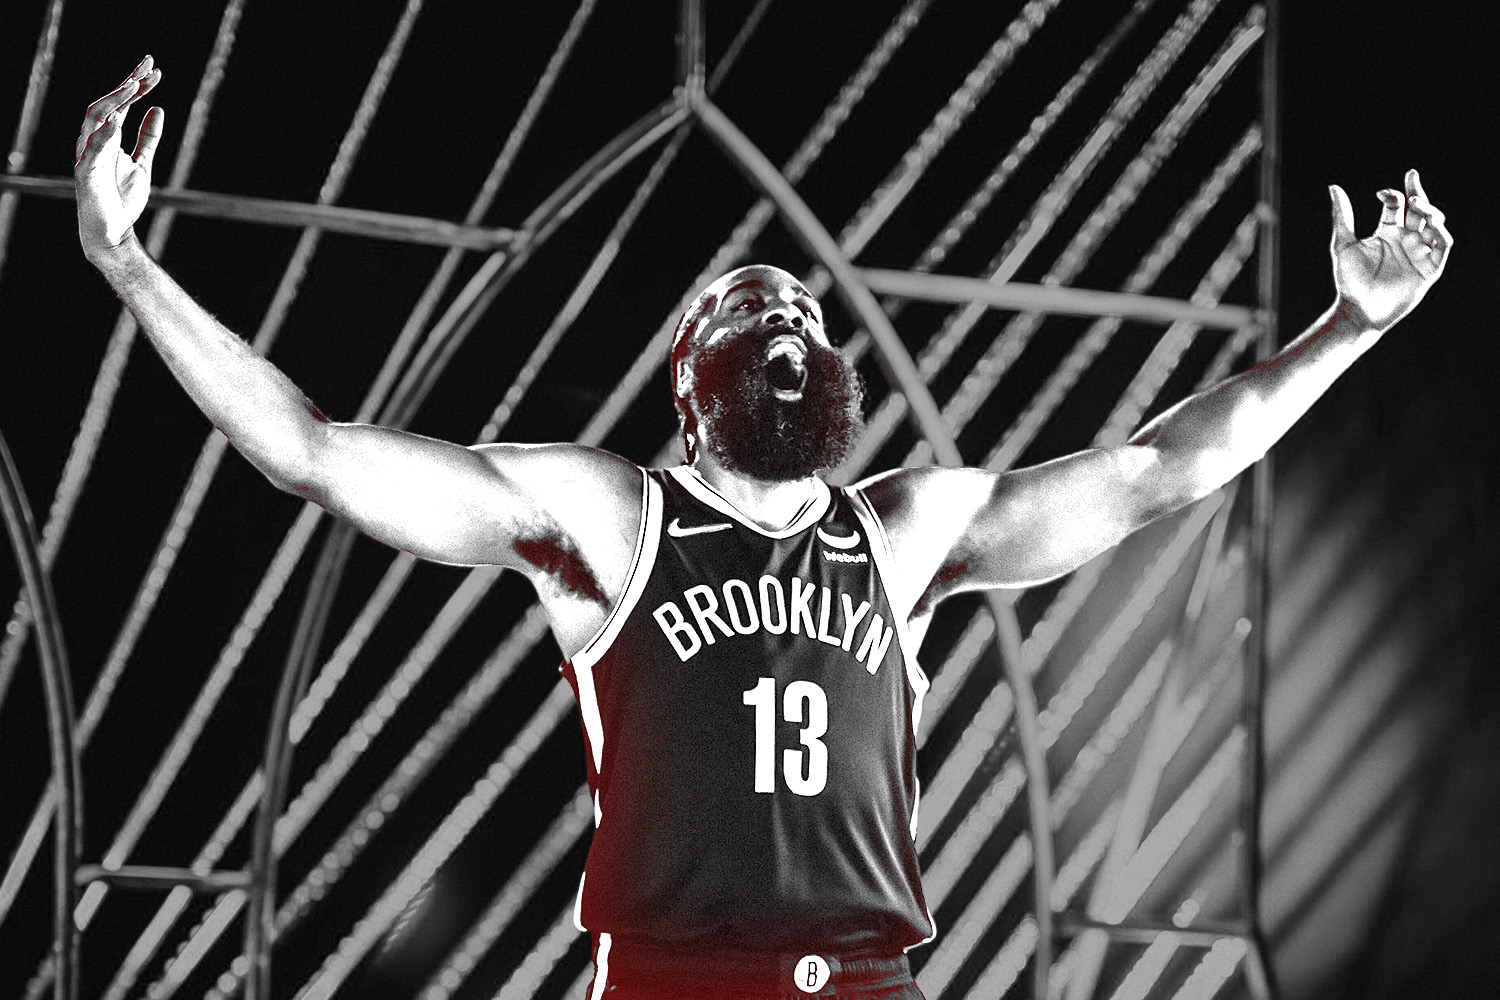 New York Knicks 'eye record $30m-a-year jersey sponsorship' to 